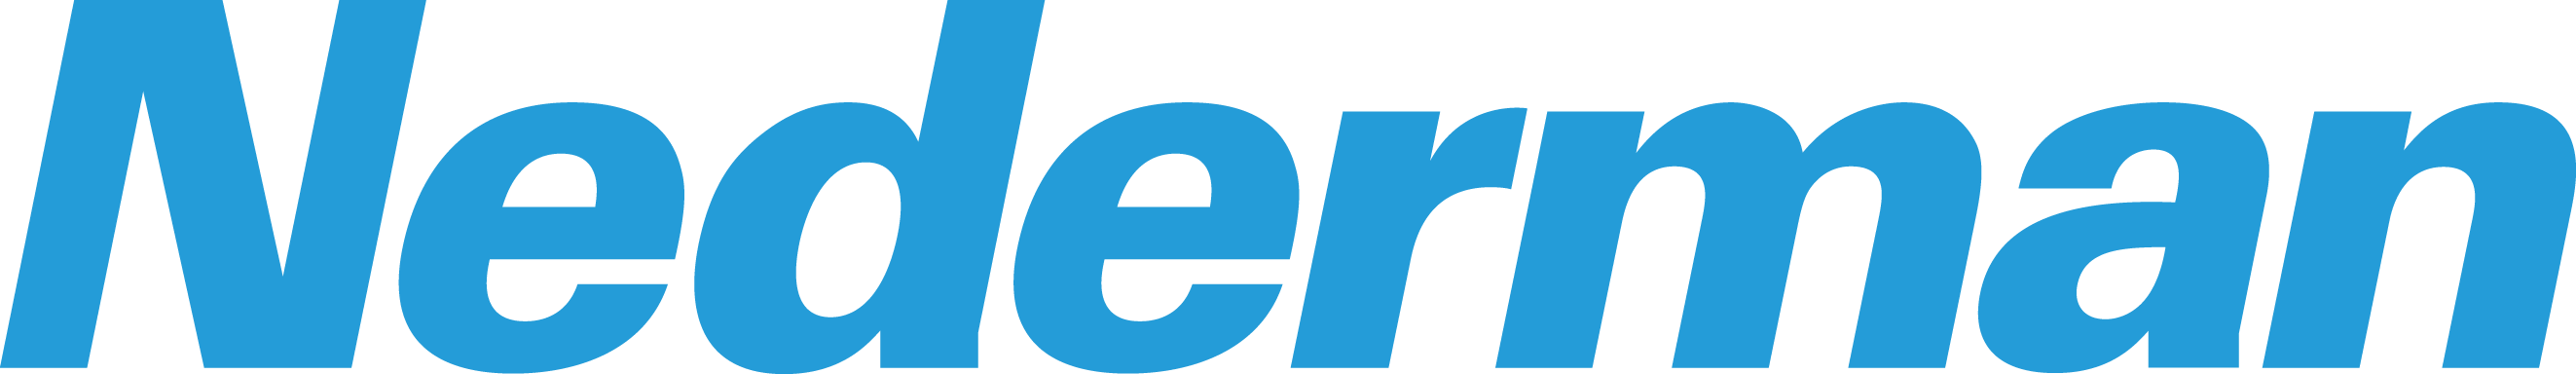 Nederman Logo